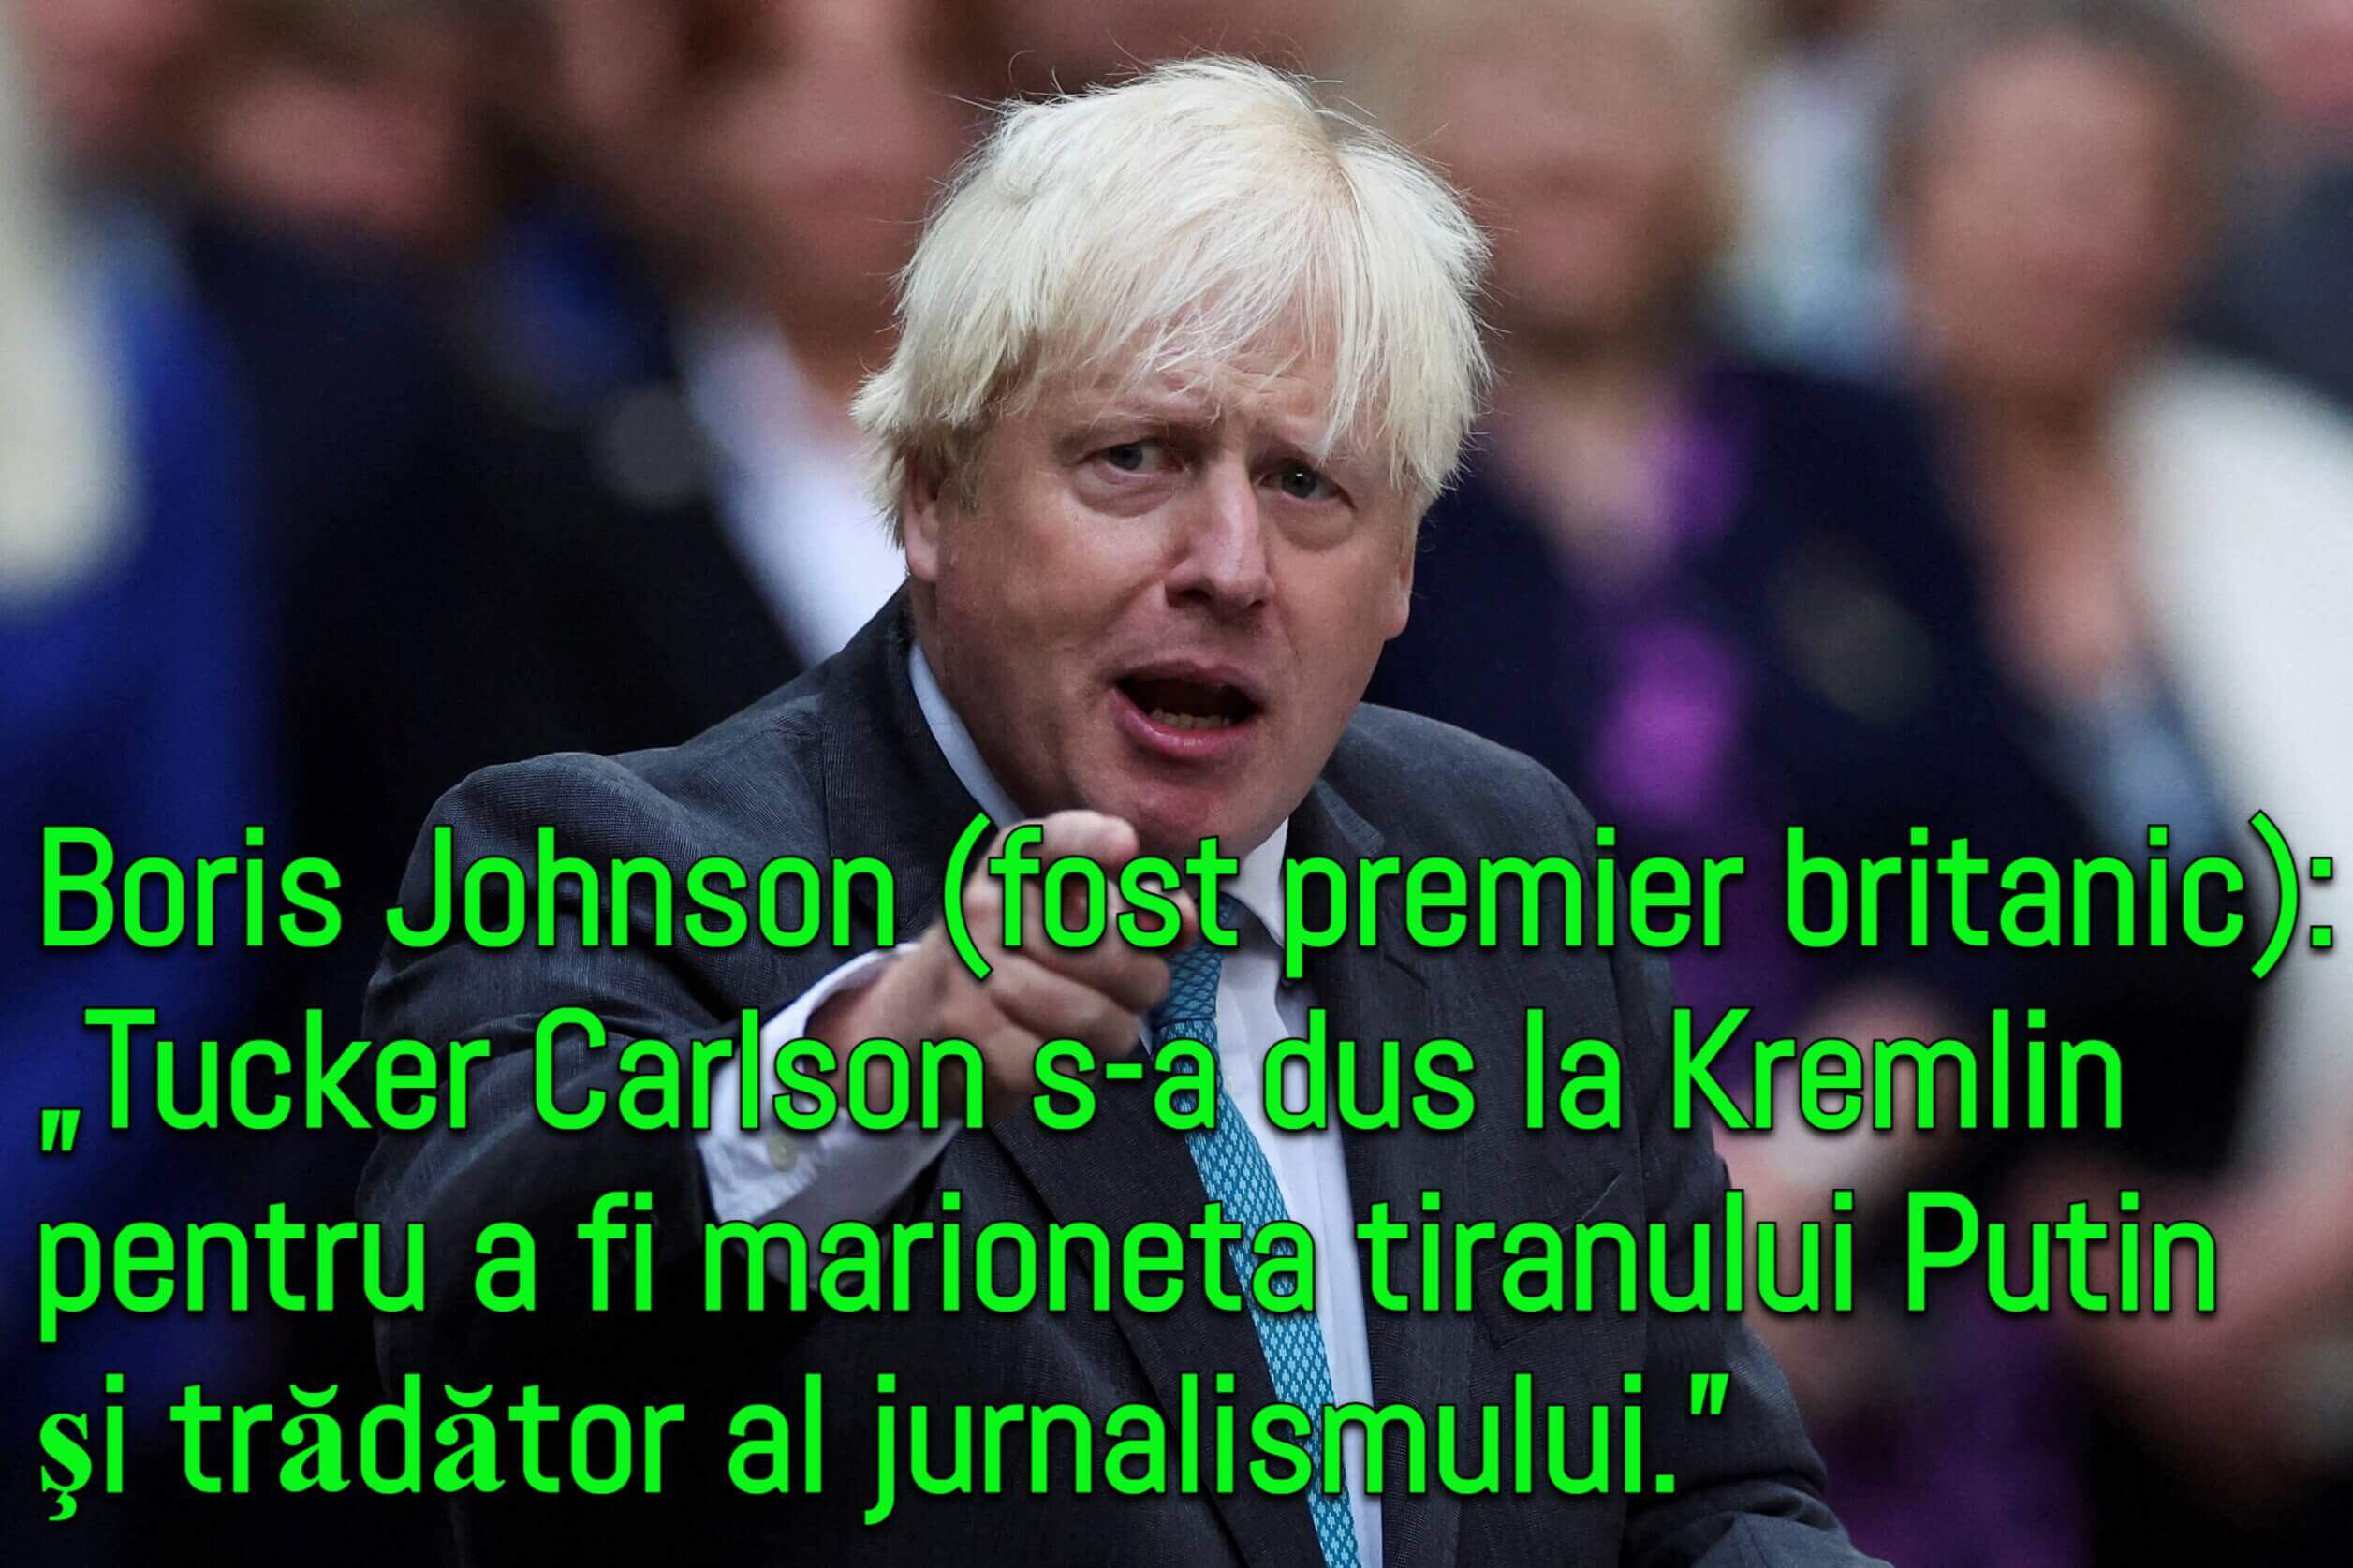 Boris Johnson despre Tucker Carlson şi tiranul Putin